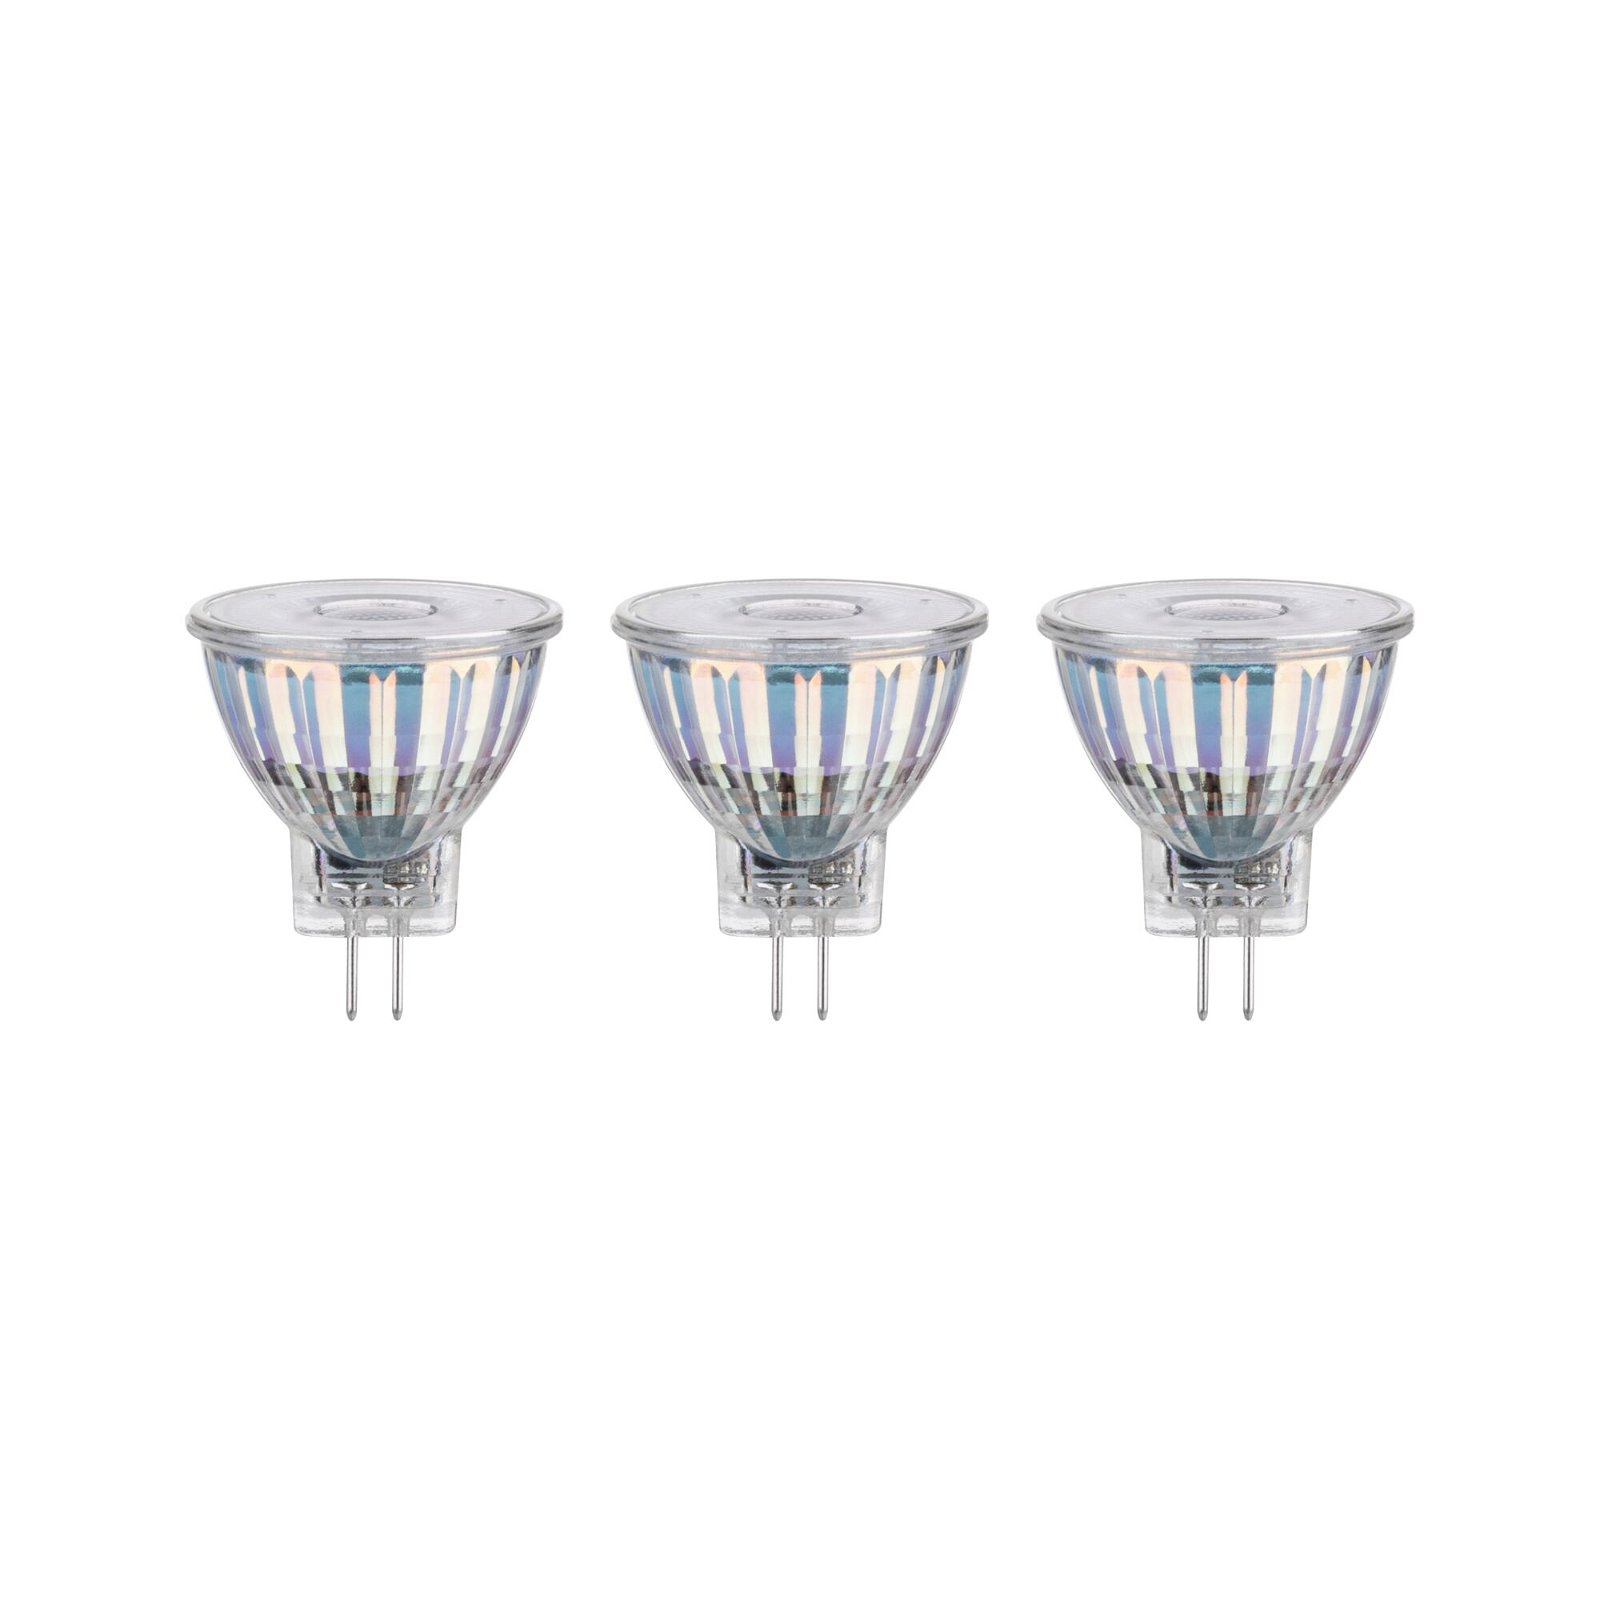 Standard 12 V LED-reflektor GU4 3x345lm 3x4,2W 2700K Sølv